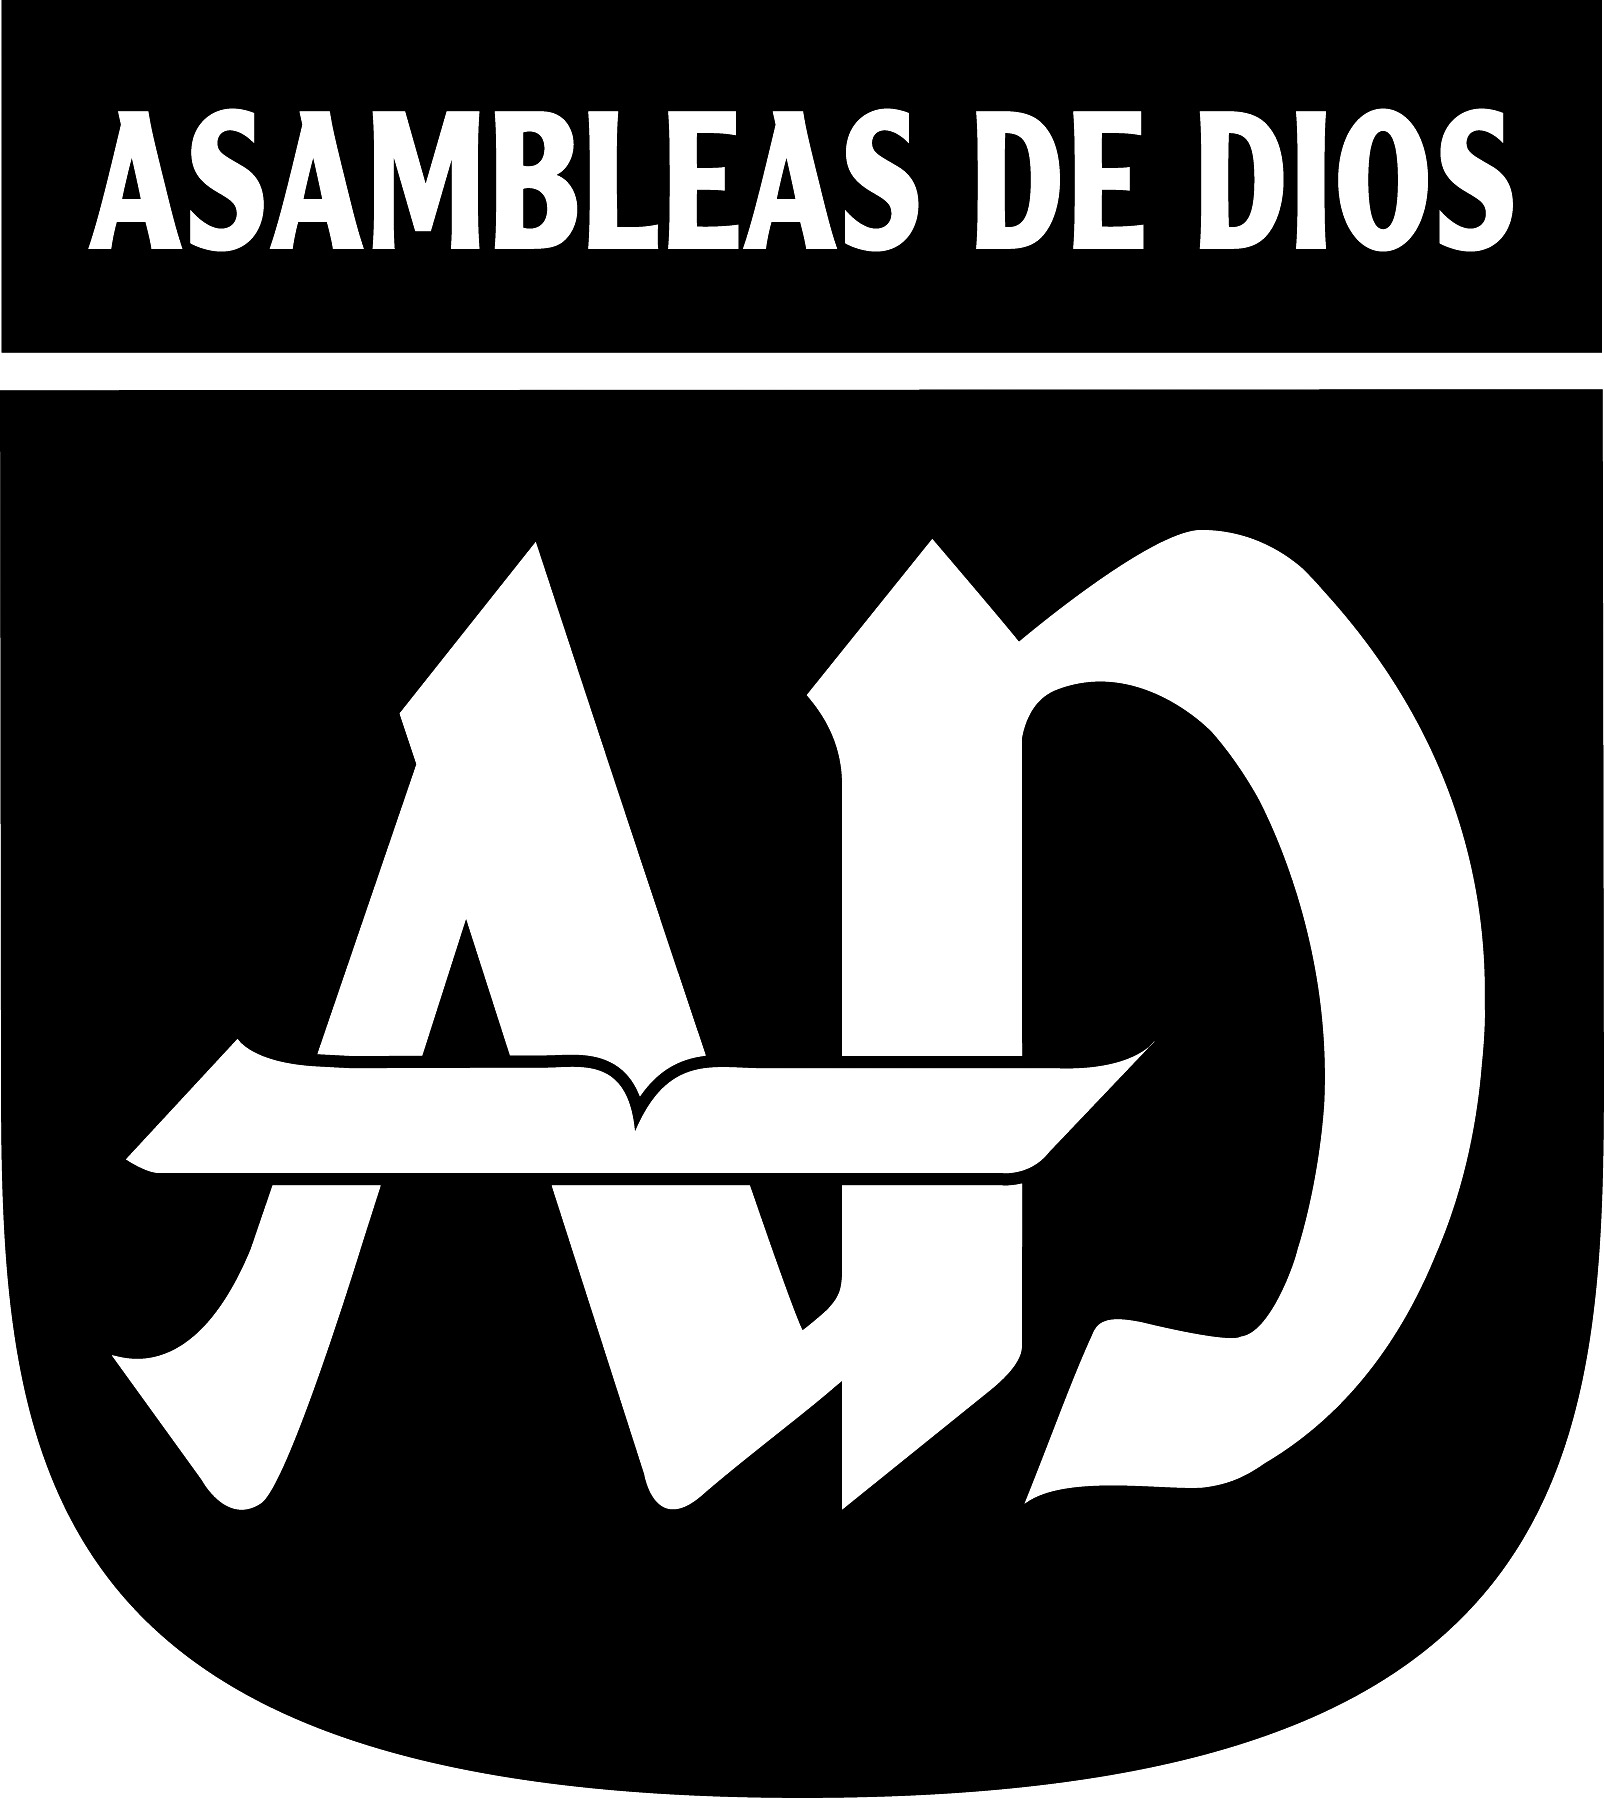 Iglesia Cristiana Getsemani De Las Asambelas De Dios, Pacoima, California.